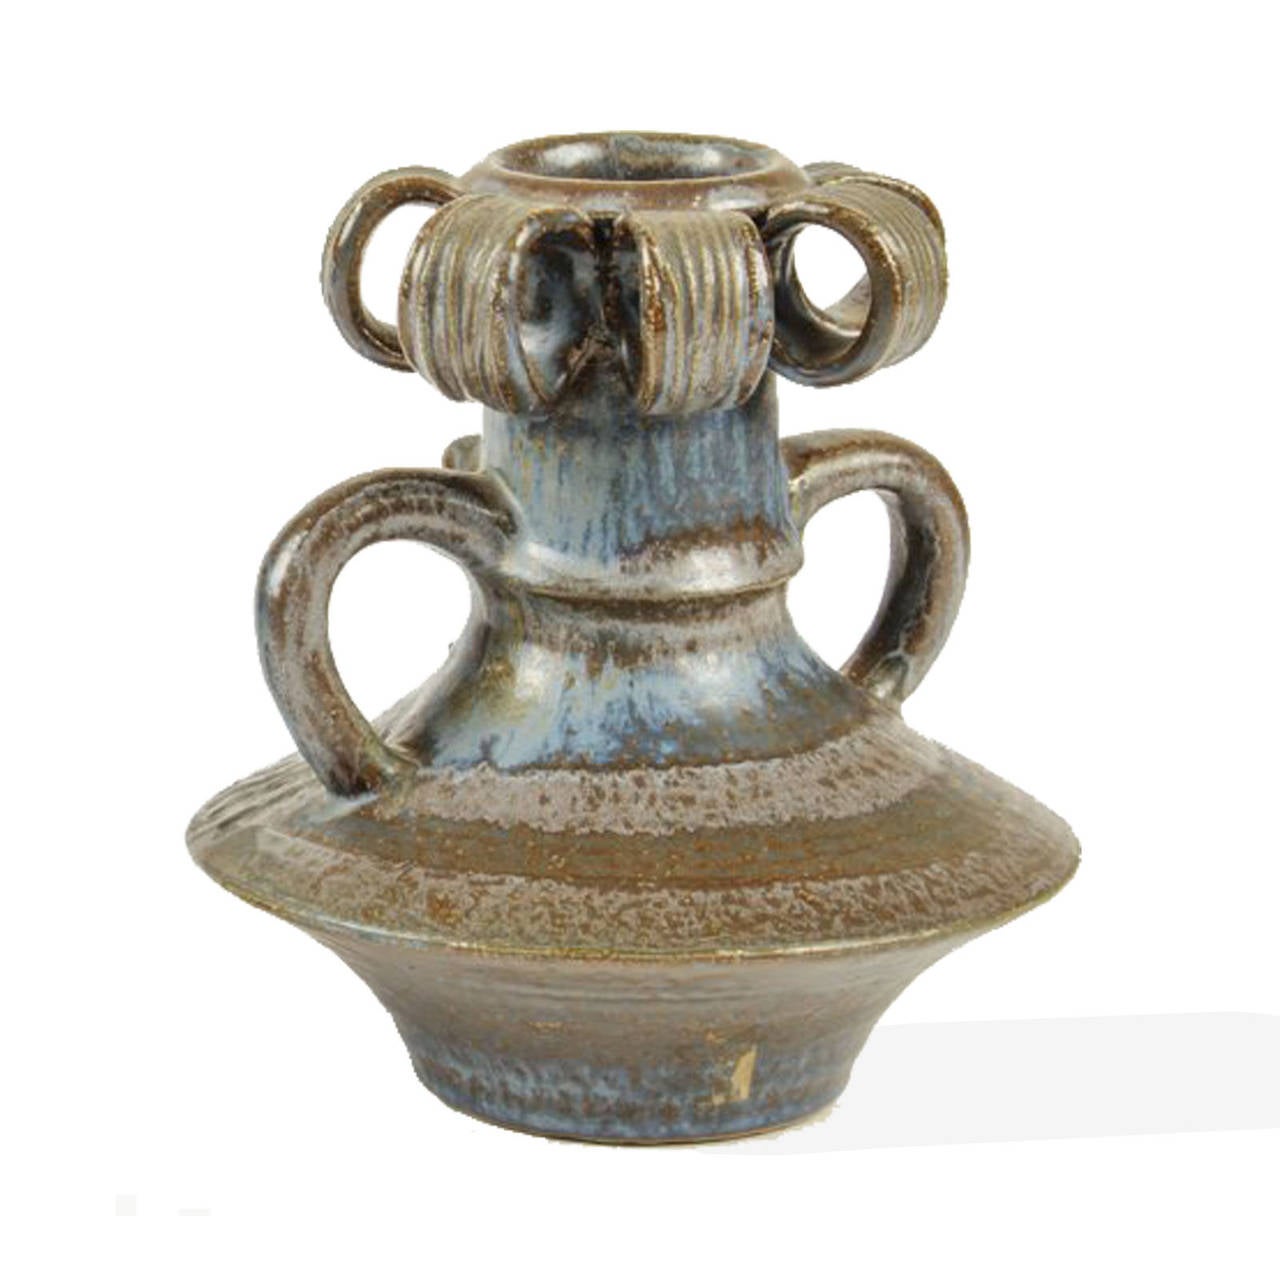 A beautiful Bornholm handmade figural earthenware vase, retaining artist signature at the bottom.